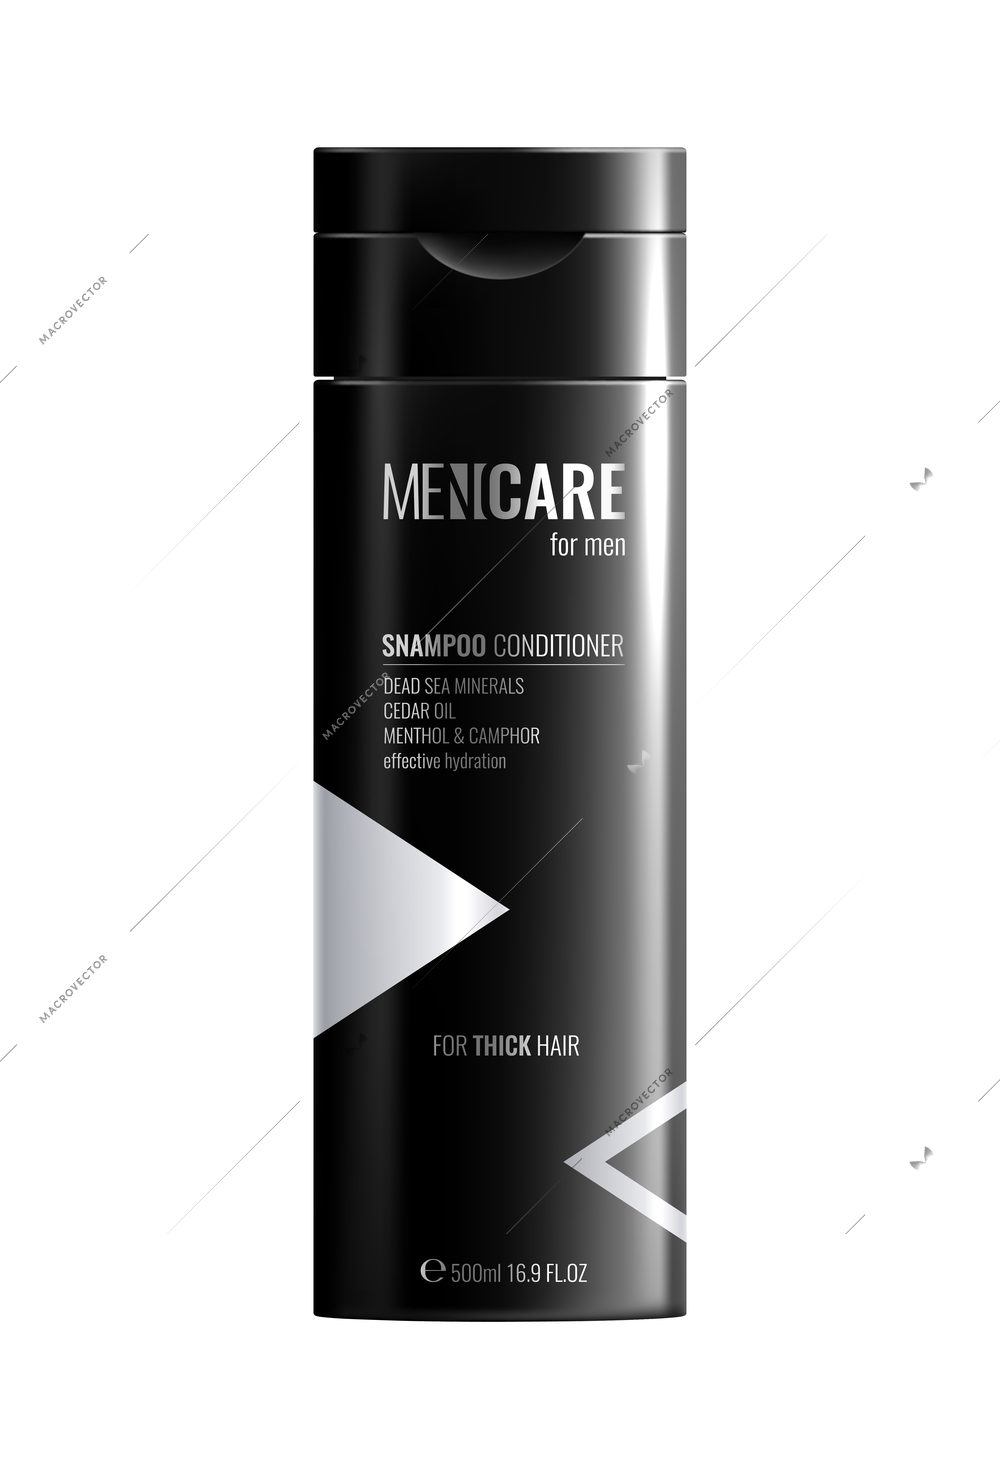 Realistic black shampoo conditioner bottle for men vector illustration